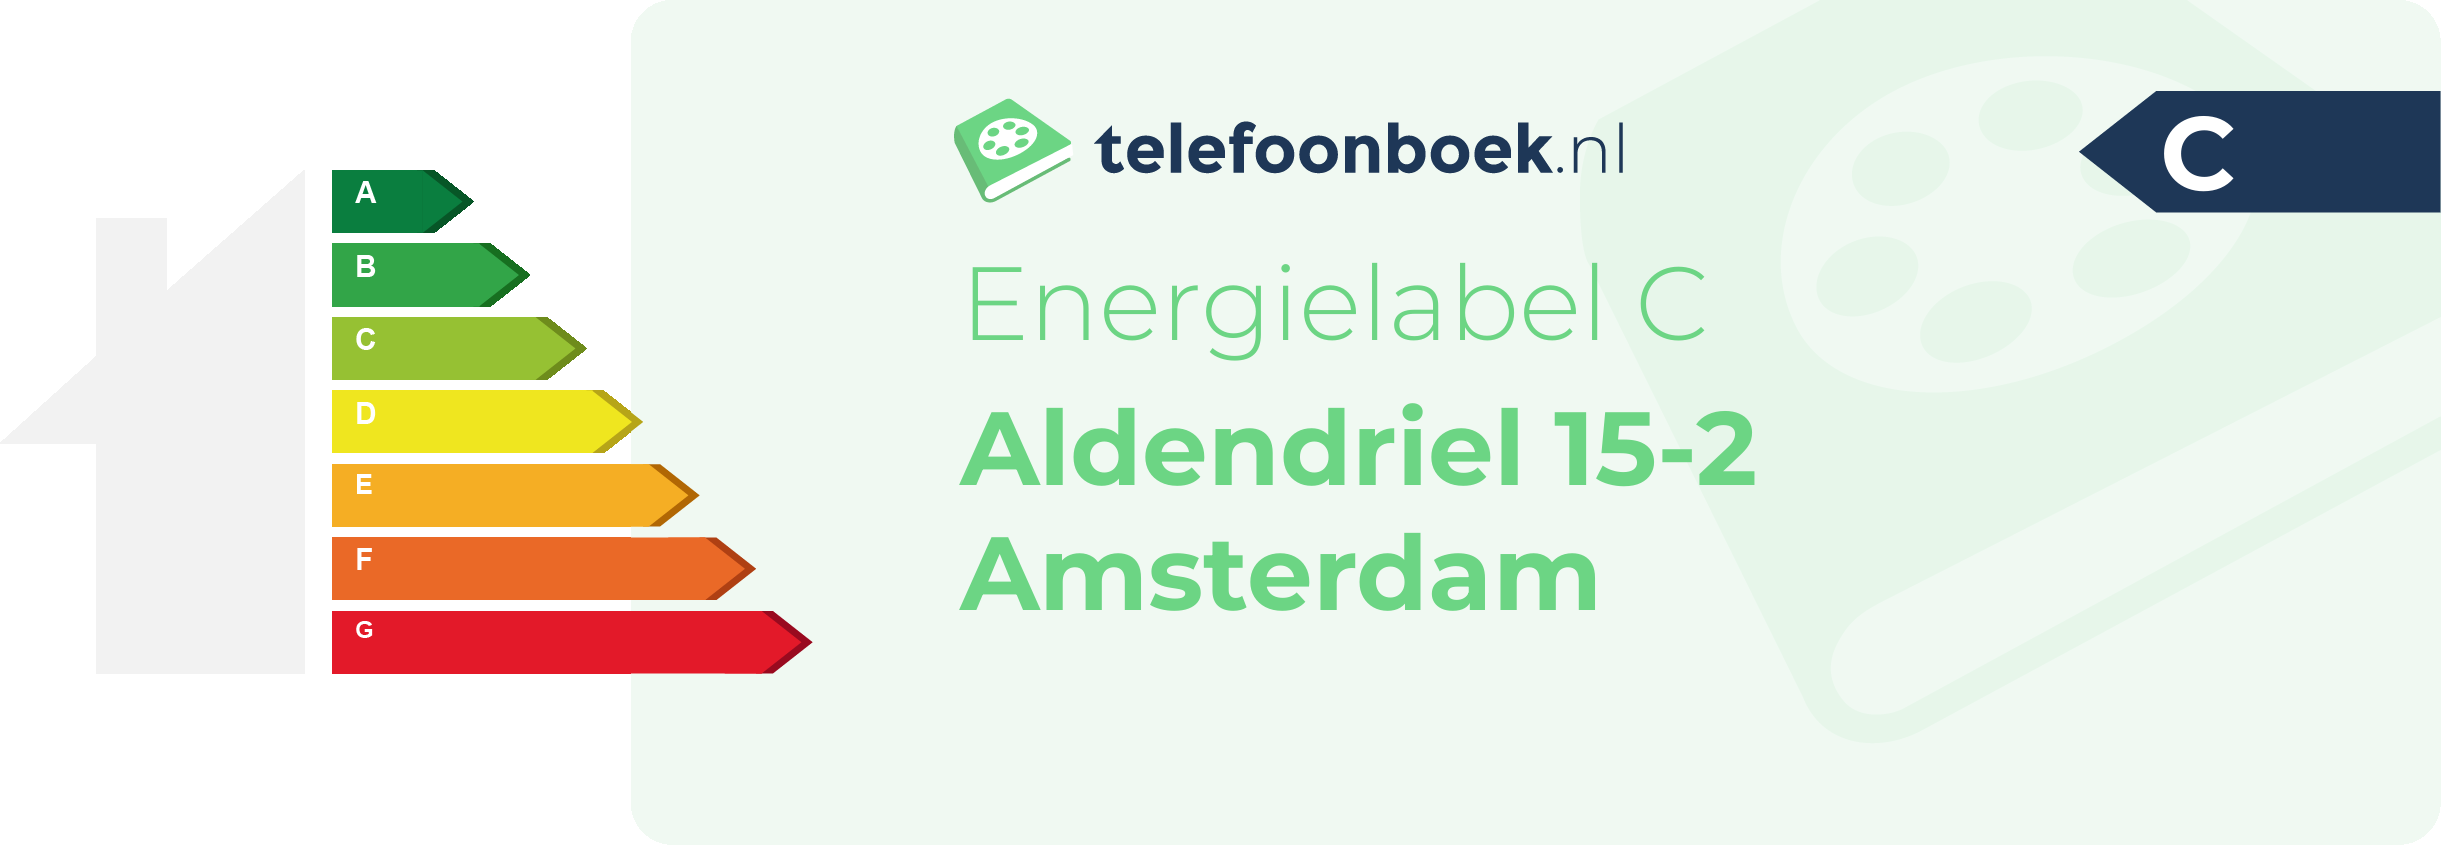 Energielabel Aldendriel 15-2 Amsterdam